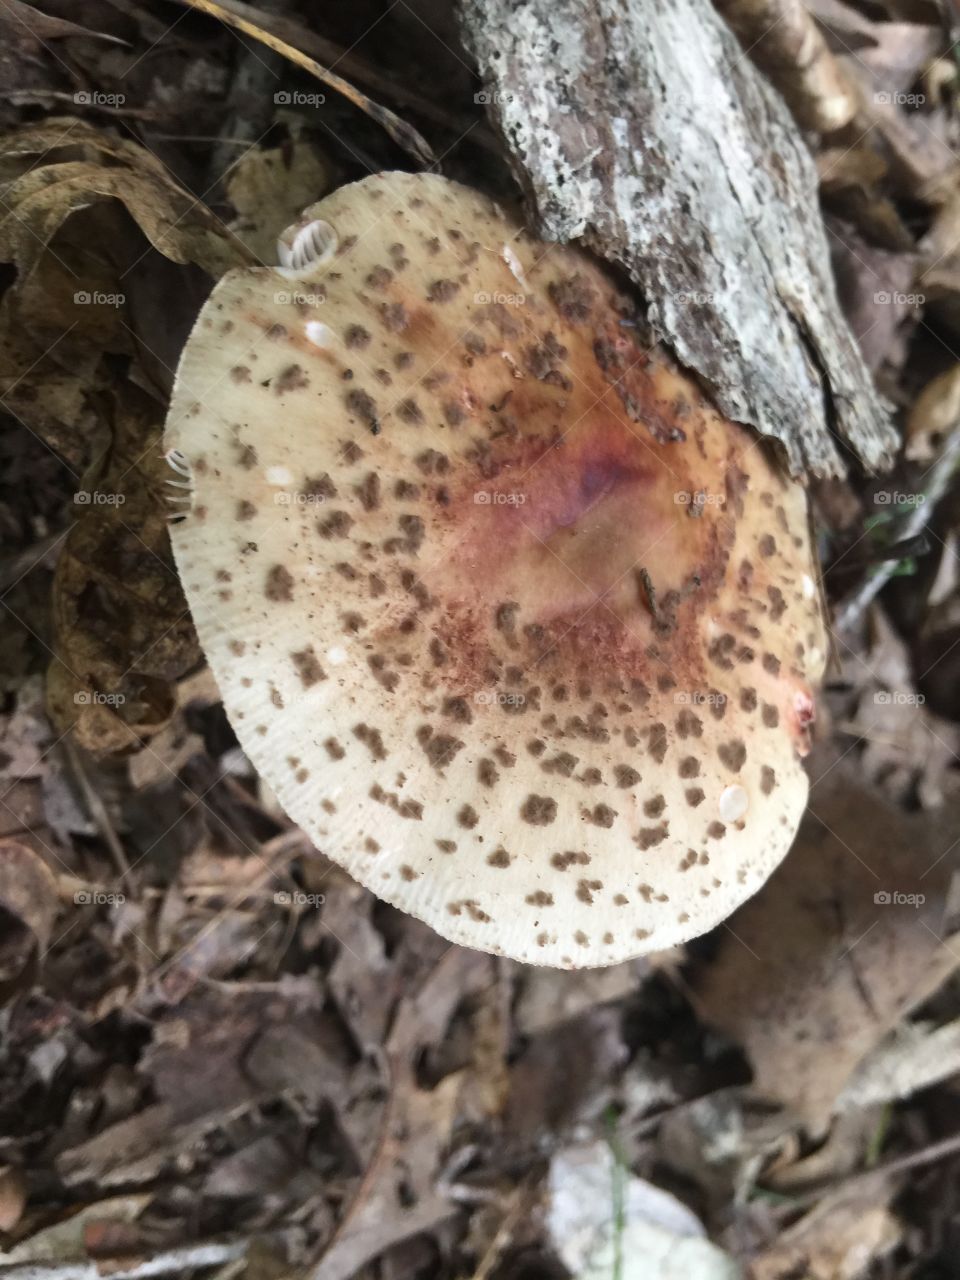 Pretty for a mushroom